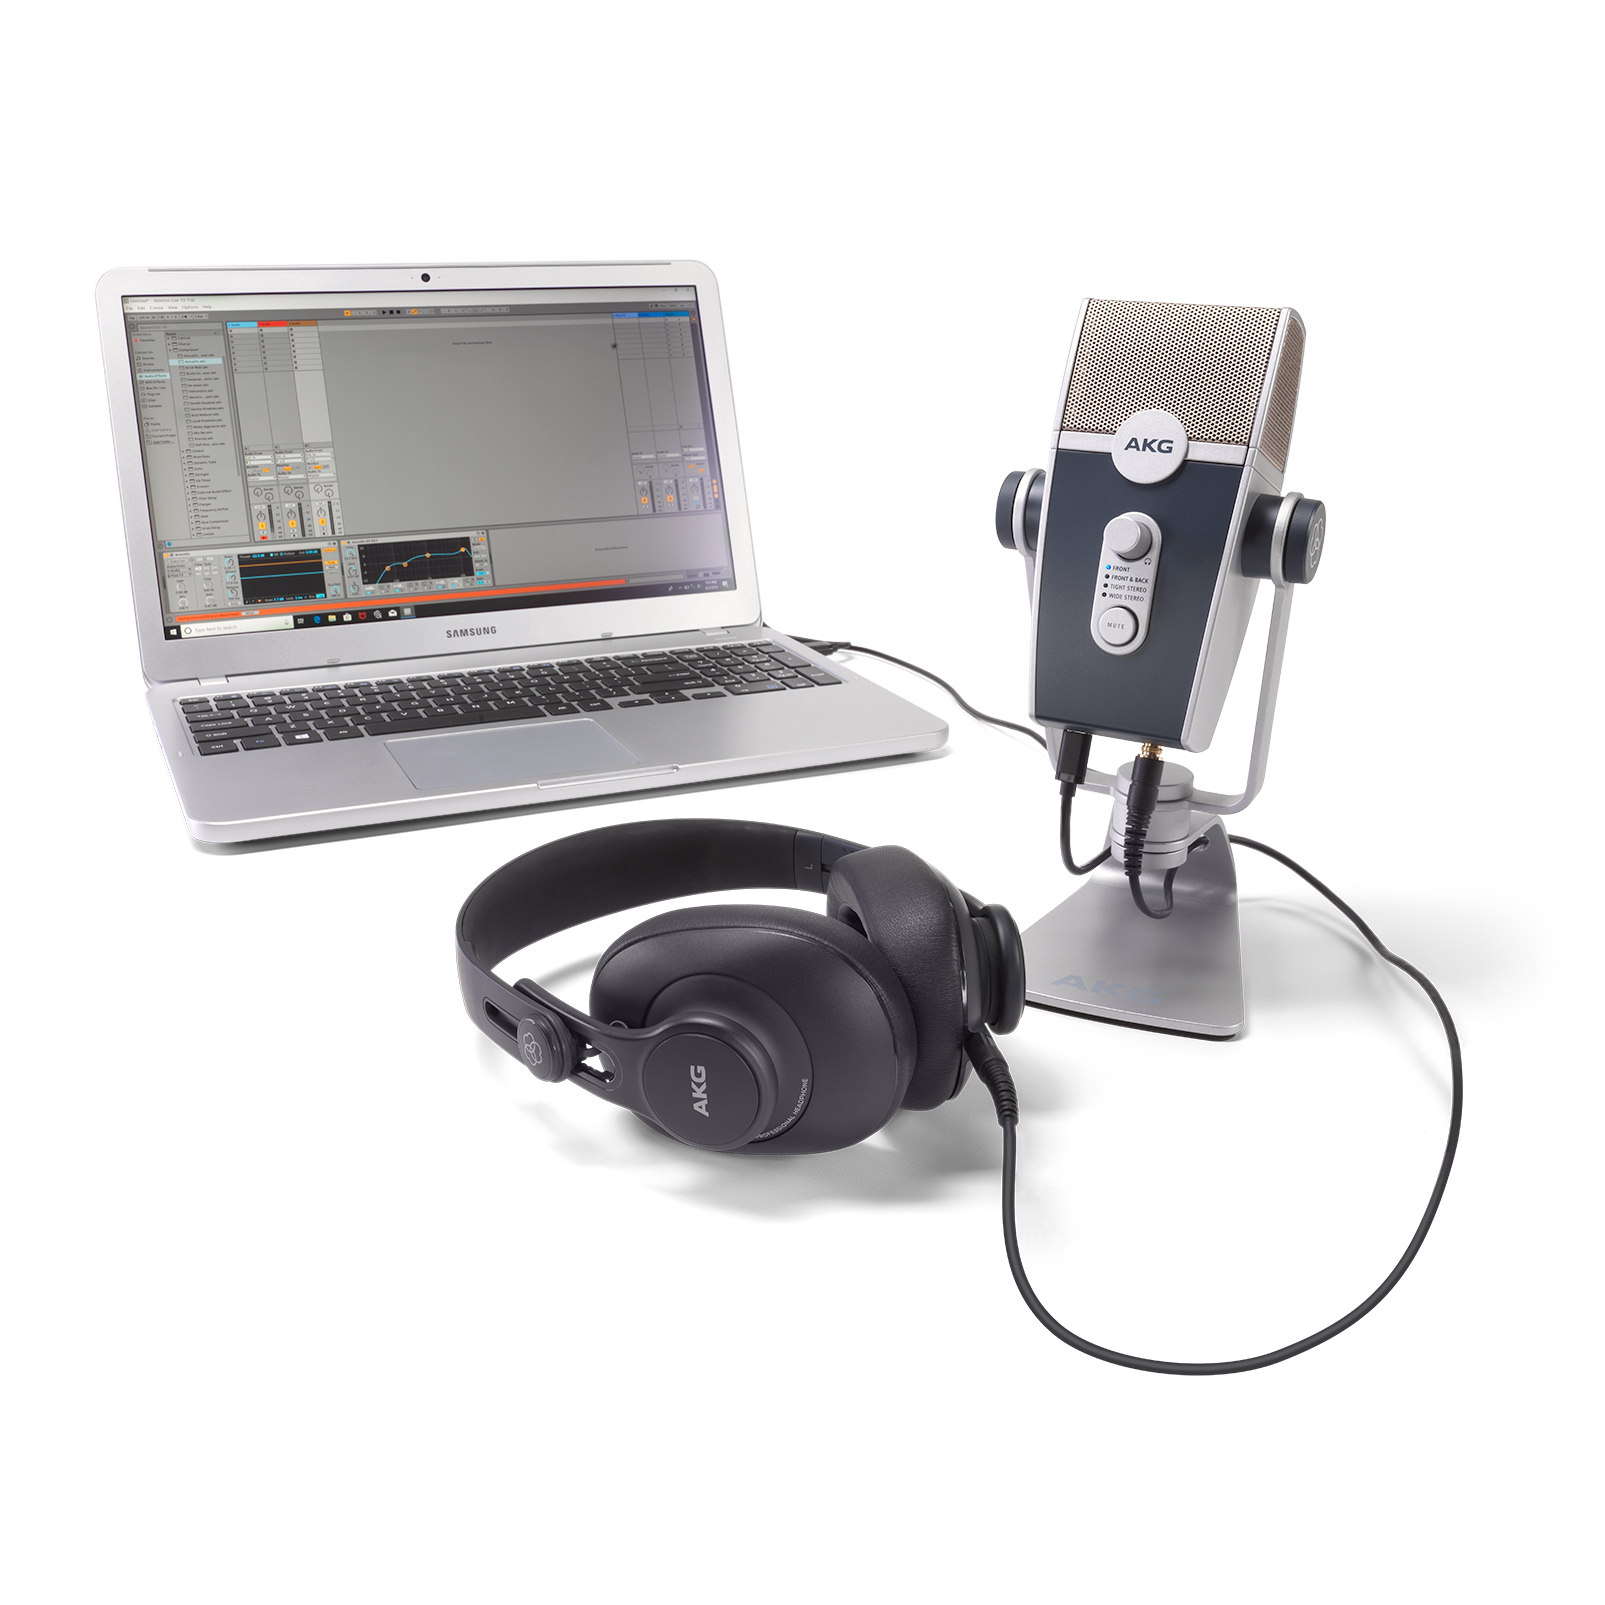 AKG Podcaster Essentials (B-Stock) - Black / Gray - Audio Production Toolkit: AKG Lyra USB Microphone and AKG K371 Headphones - Detailshot 2